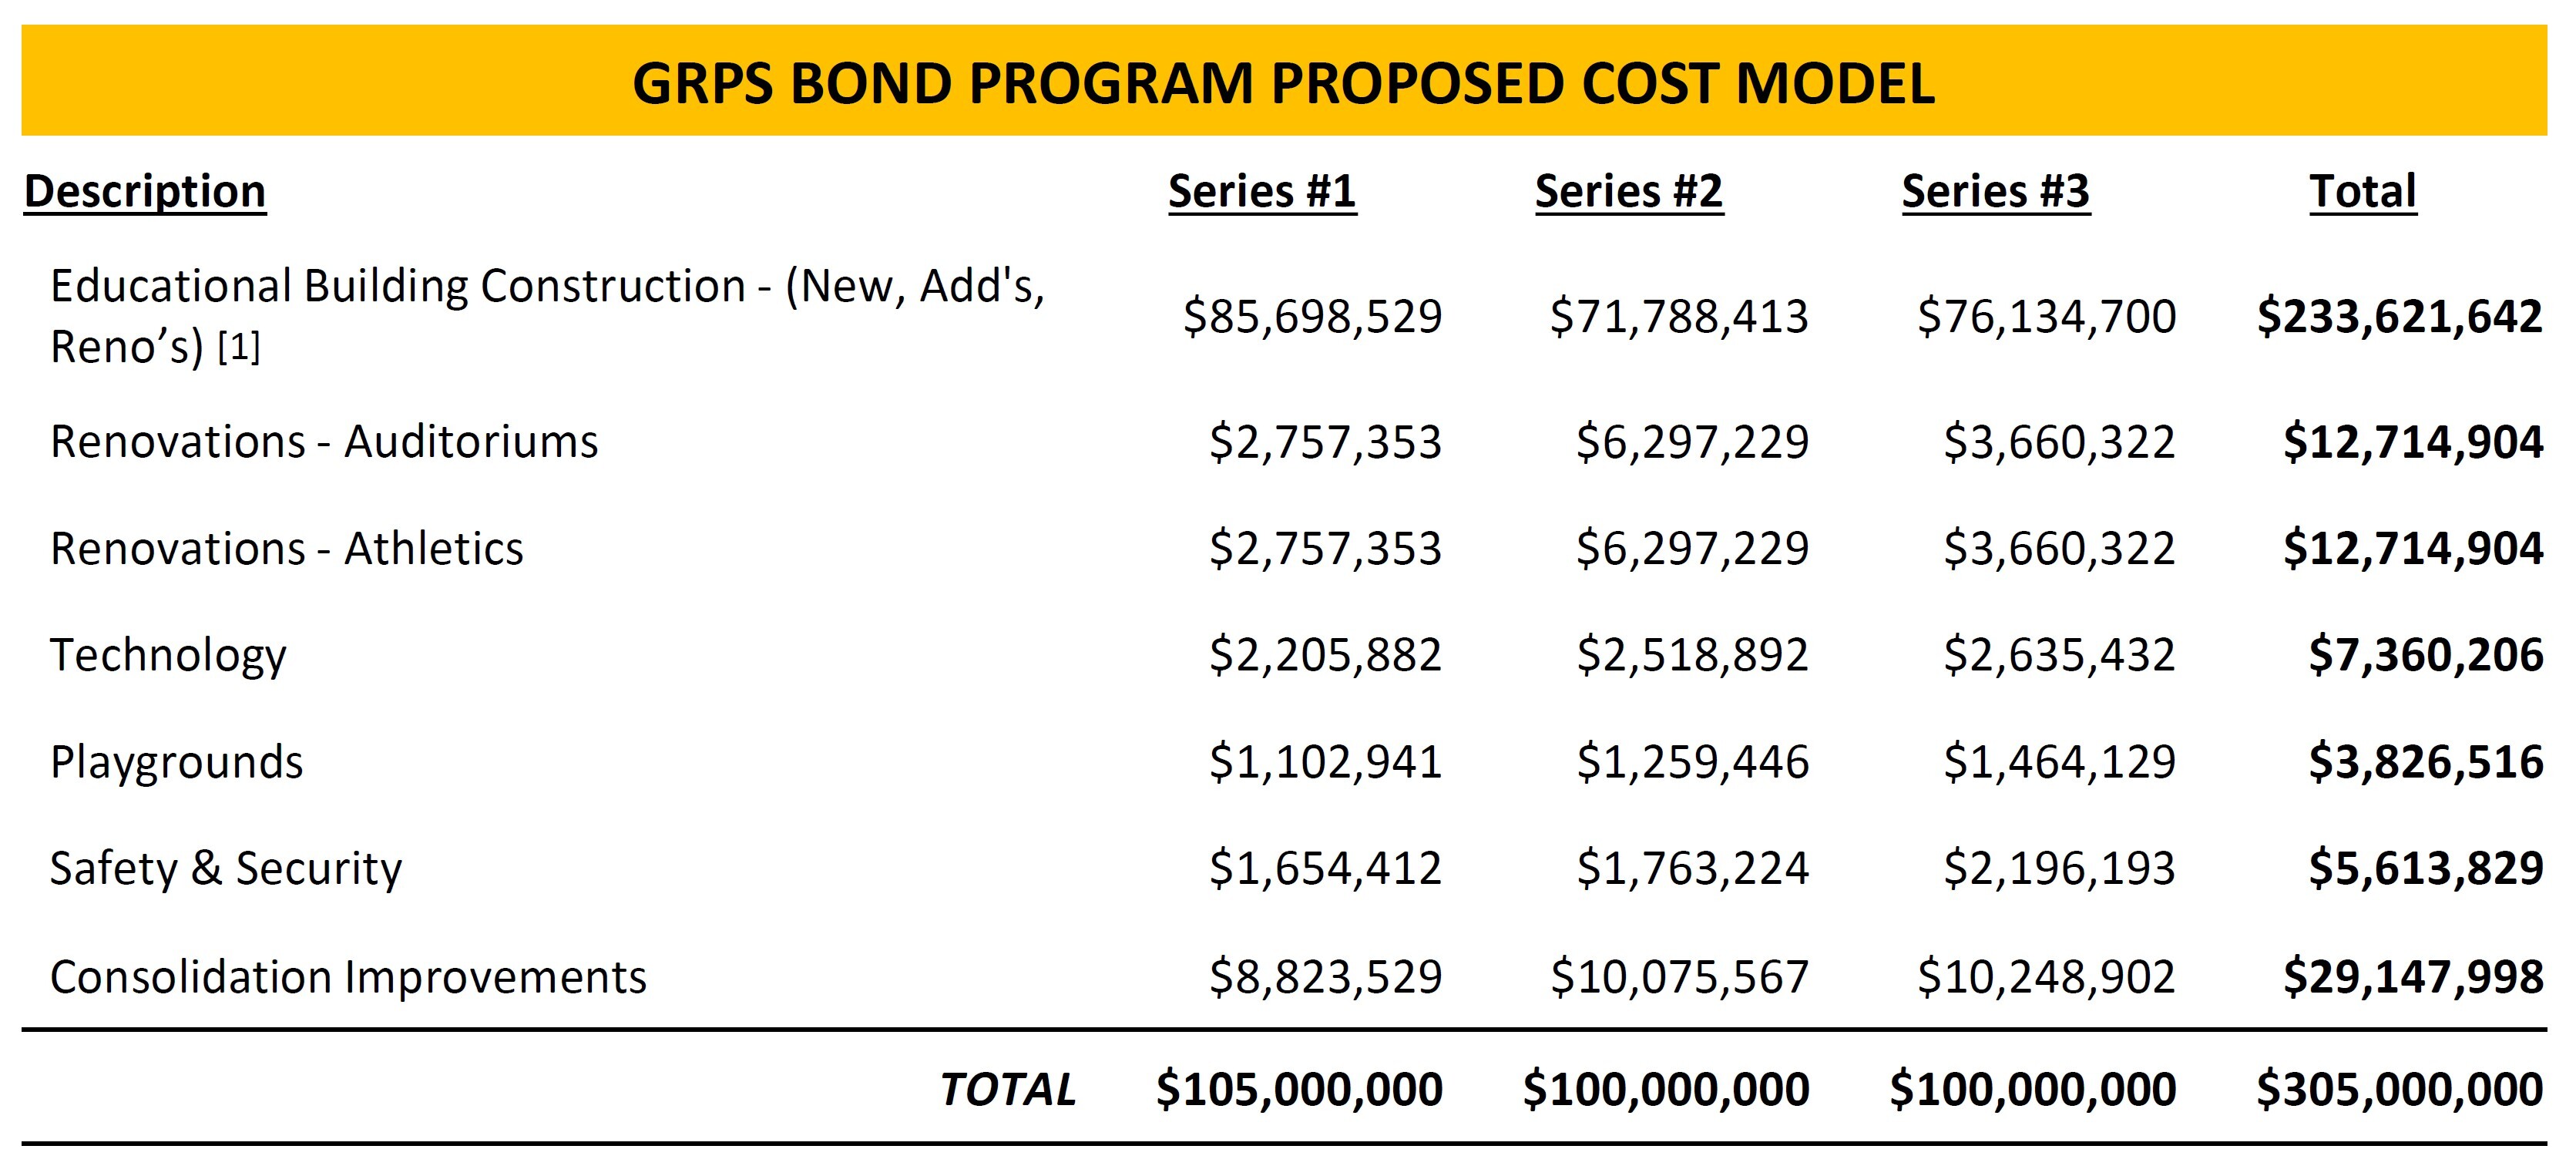 GRPS Bond Program Proposed Cost Model